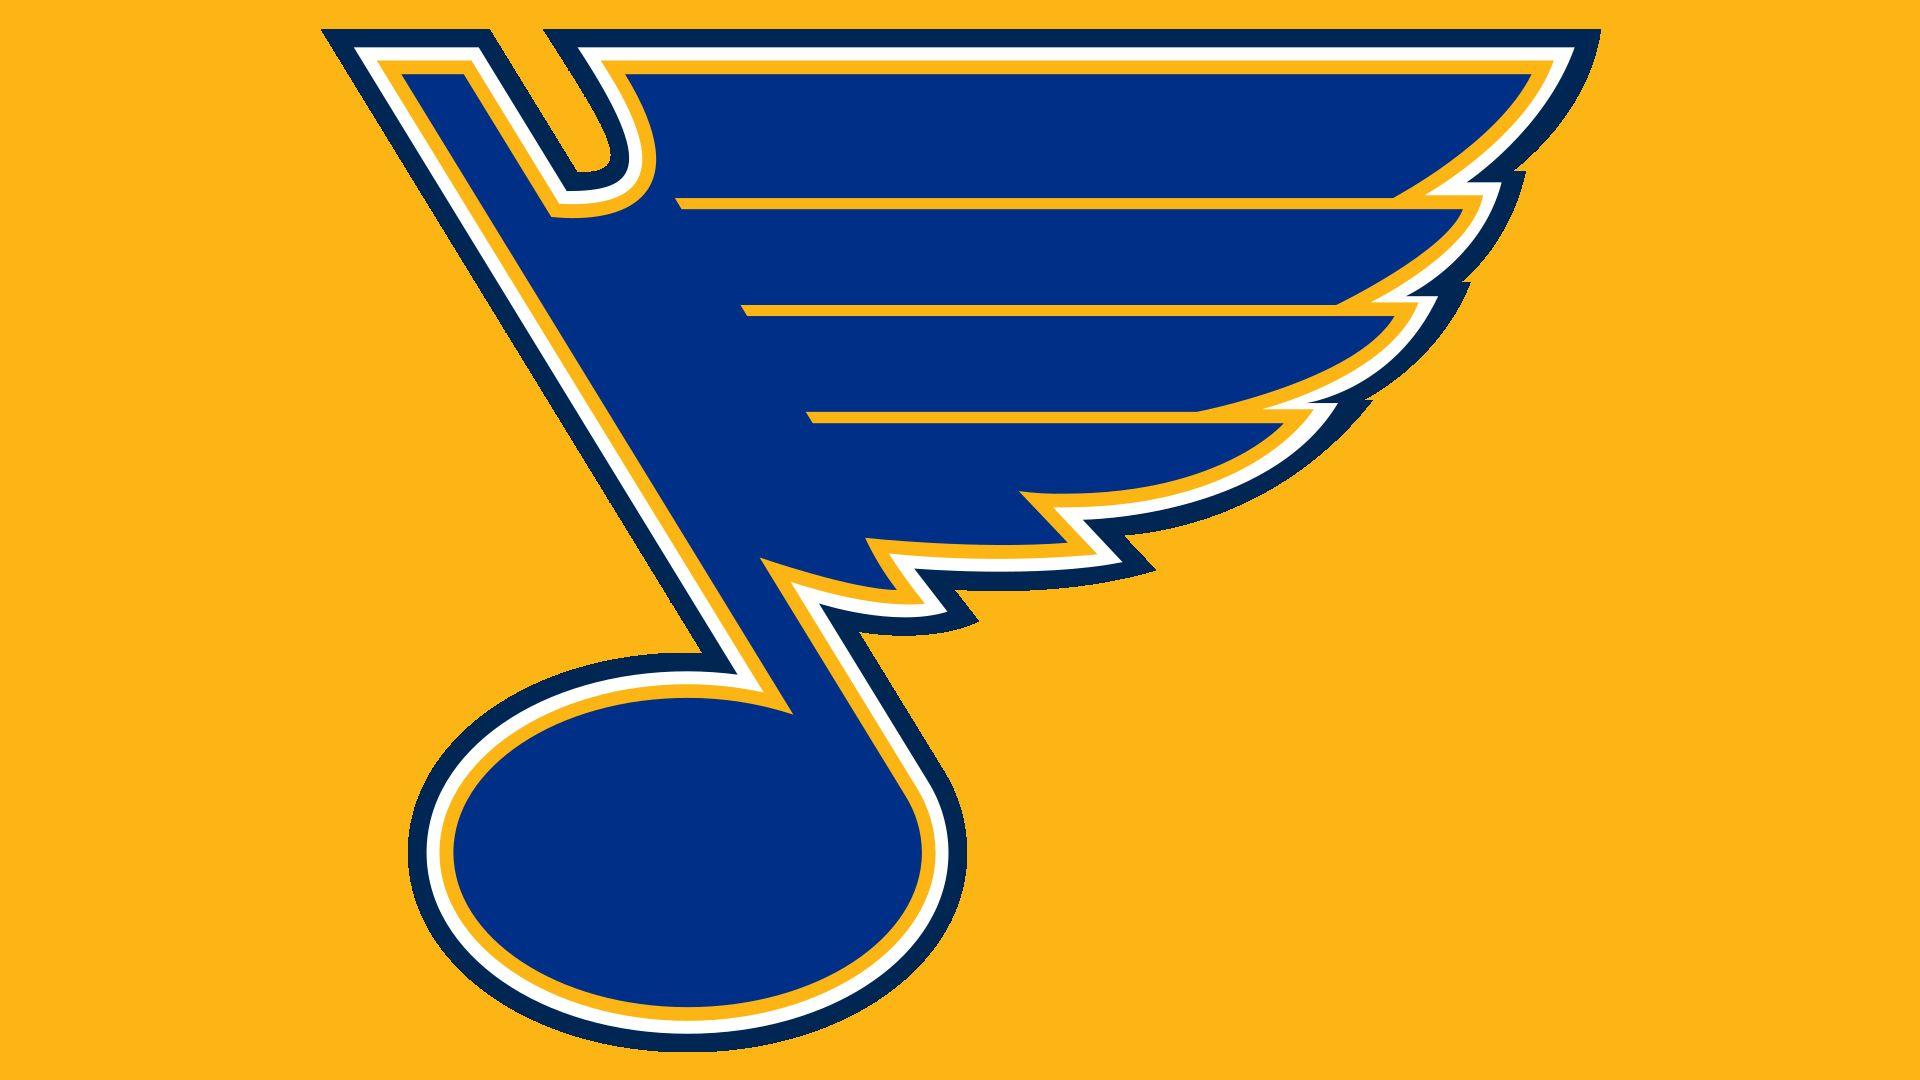 St. Louis Blues Hockey Logo - St. Louis Blues Logo, St. Louis Blues Symbol, Meaning, History